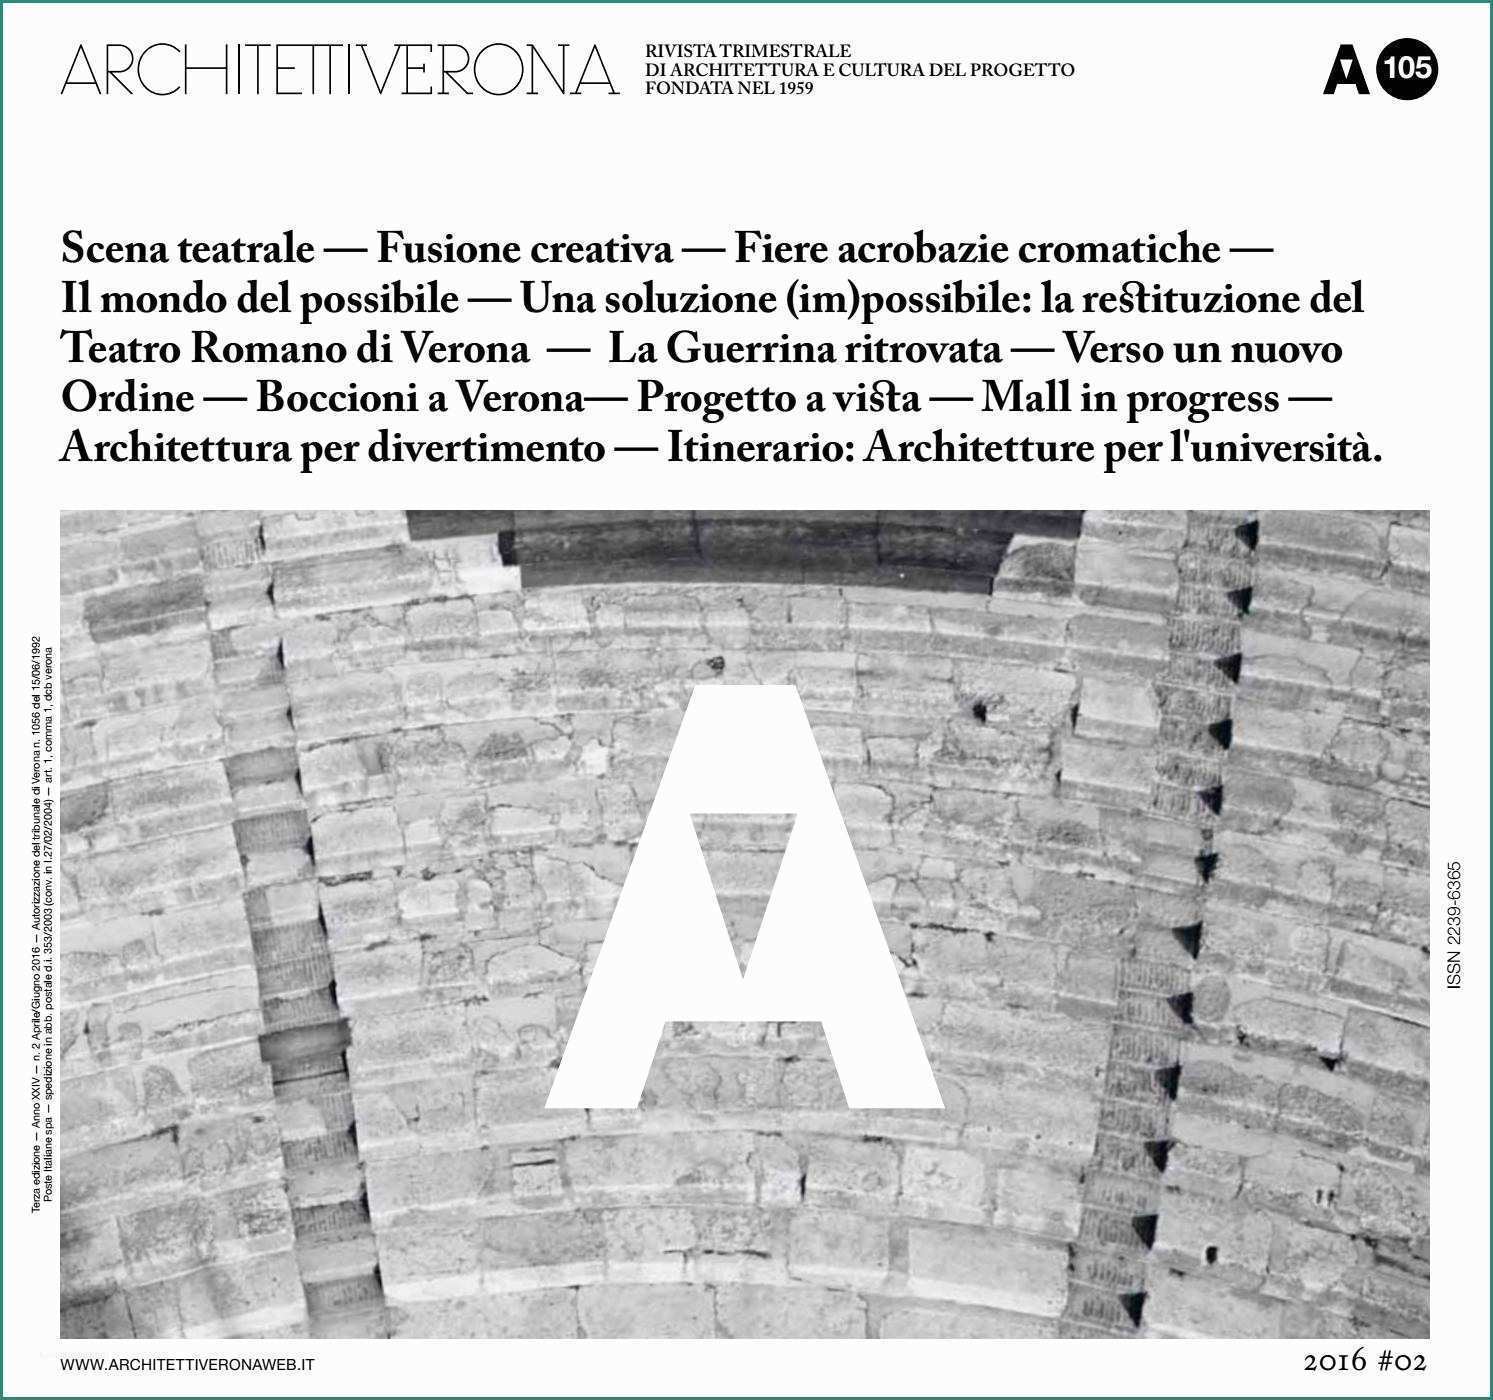 Porte Scorrevoli Esterne Dwg E Architettiverona 105 by Architettiverona issuu